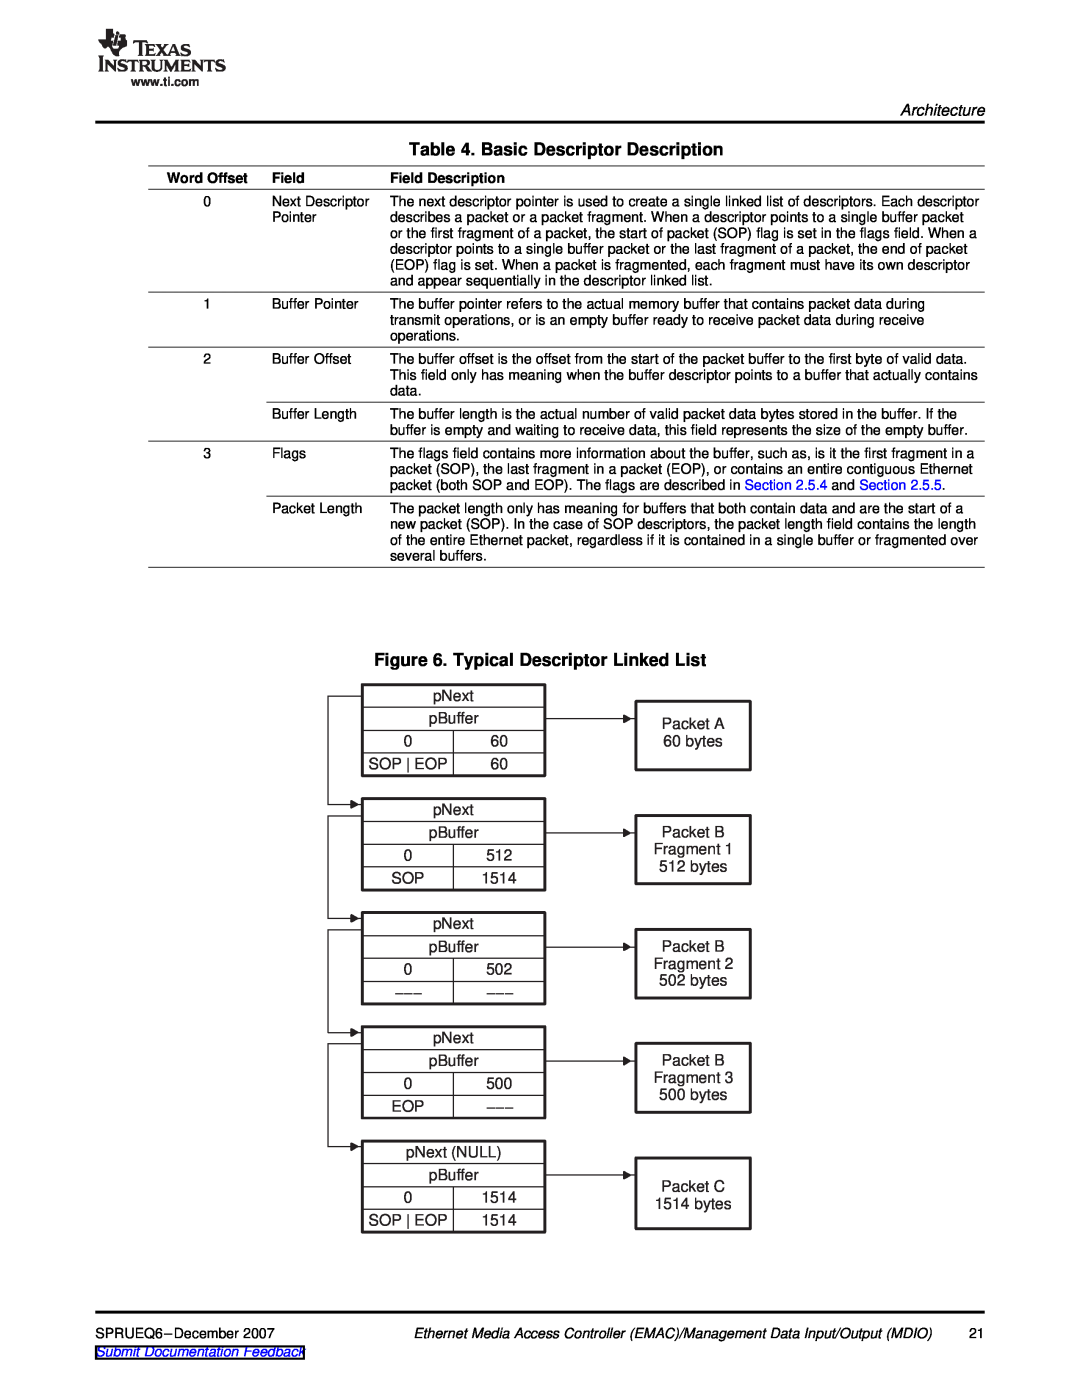 Texas Instruments TMS320DM646x manual Basic Descriptor Description, Typical Descriptor Linked List 